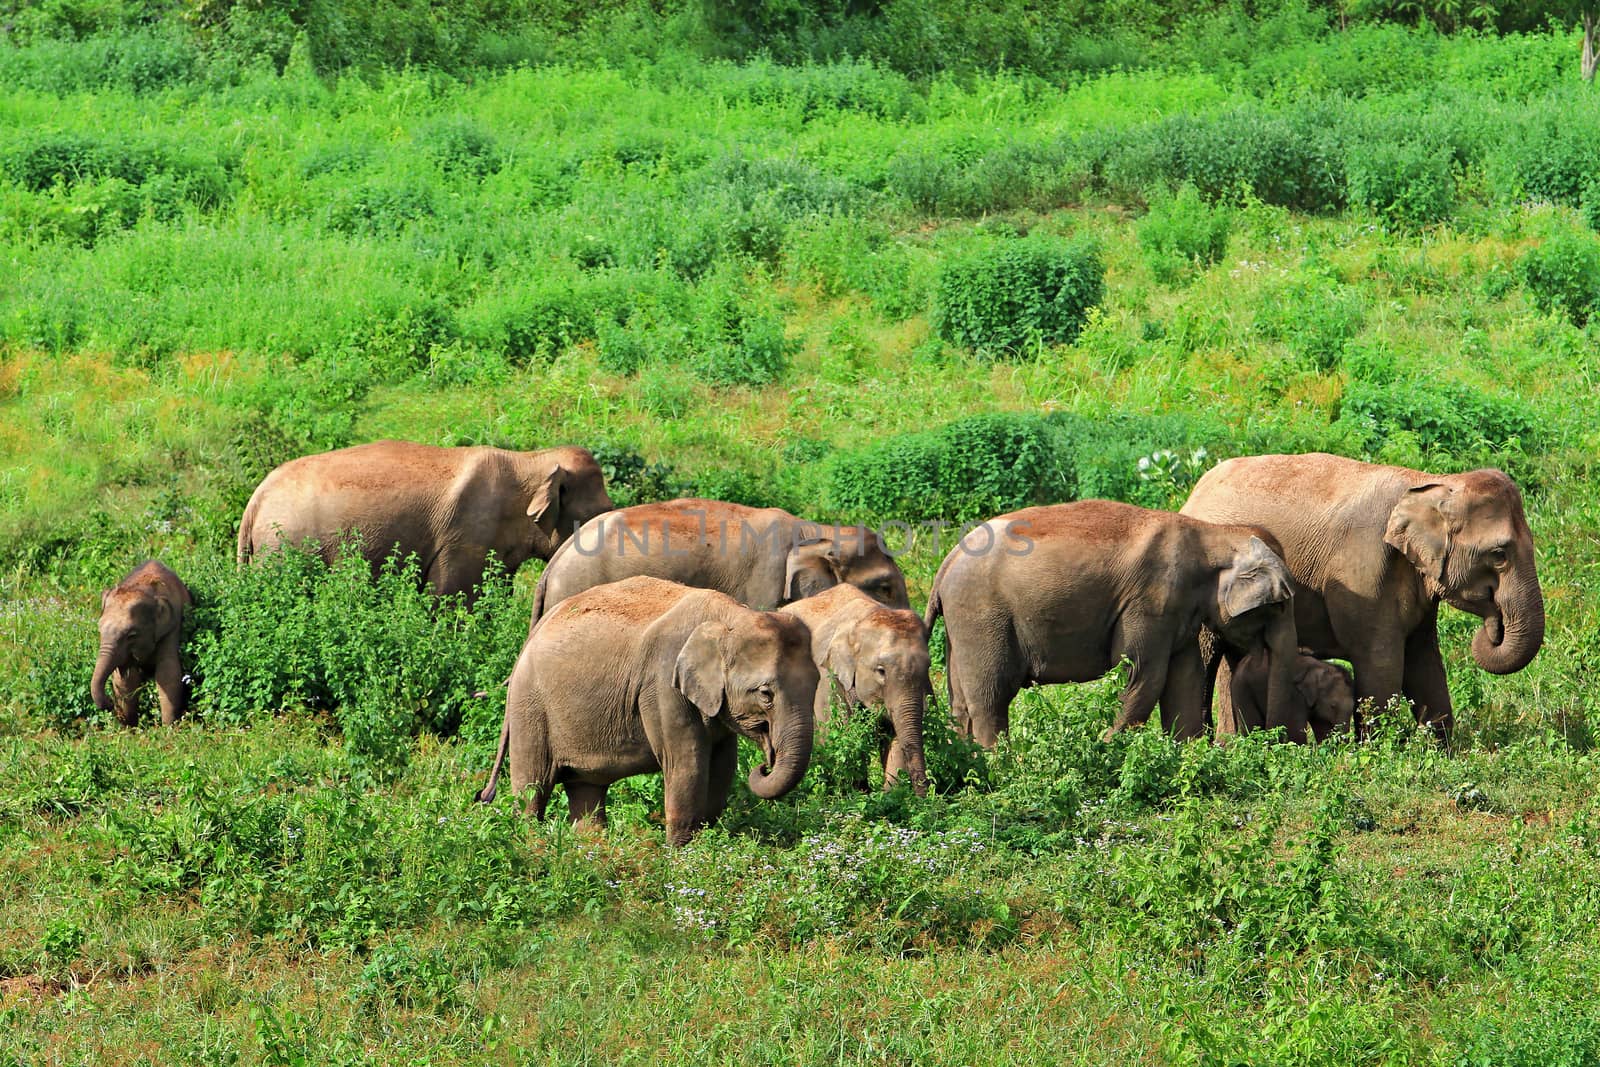 Asia wild elephants at Kui buri National Park, Prachuap Khiri Khan Province, Thailand